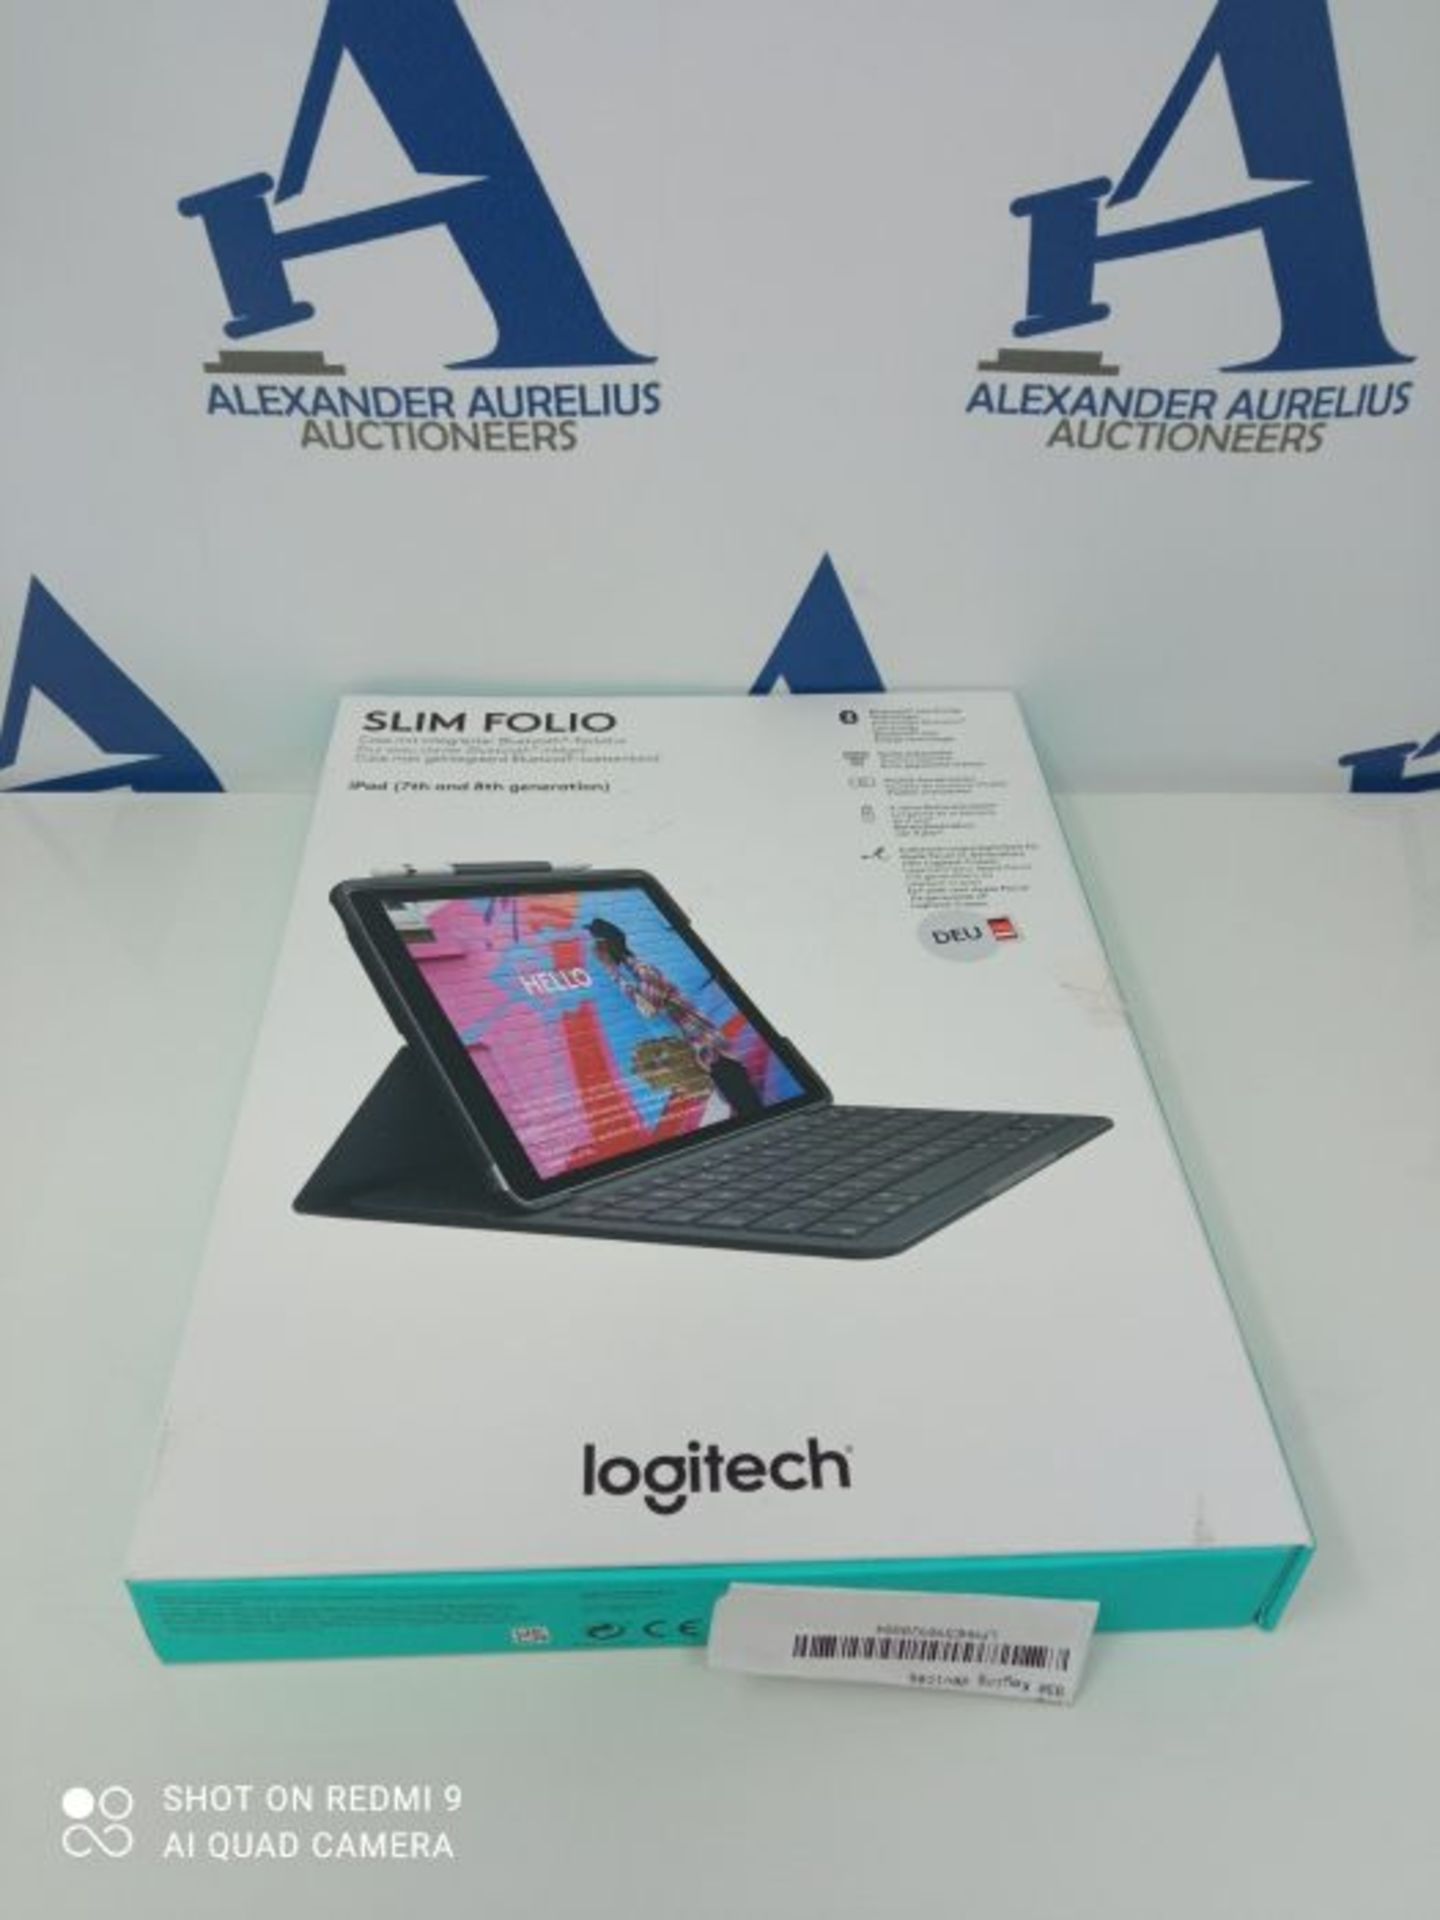 RRP £72.00 Logitech SLIM FOLIO iPad Keyboard Case 10.2 Inch, QWERTZ German Layout - Graphite Blac - Image 2 of 3